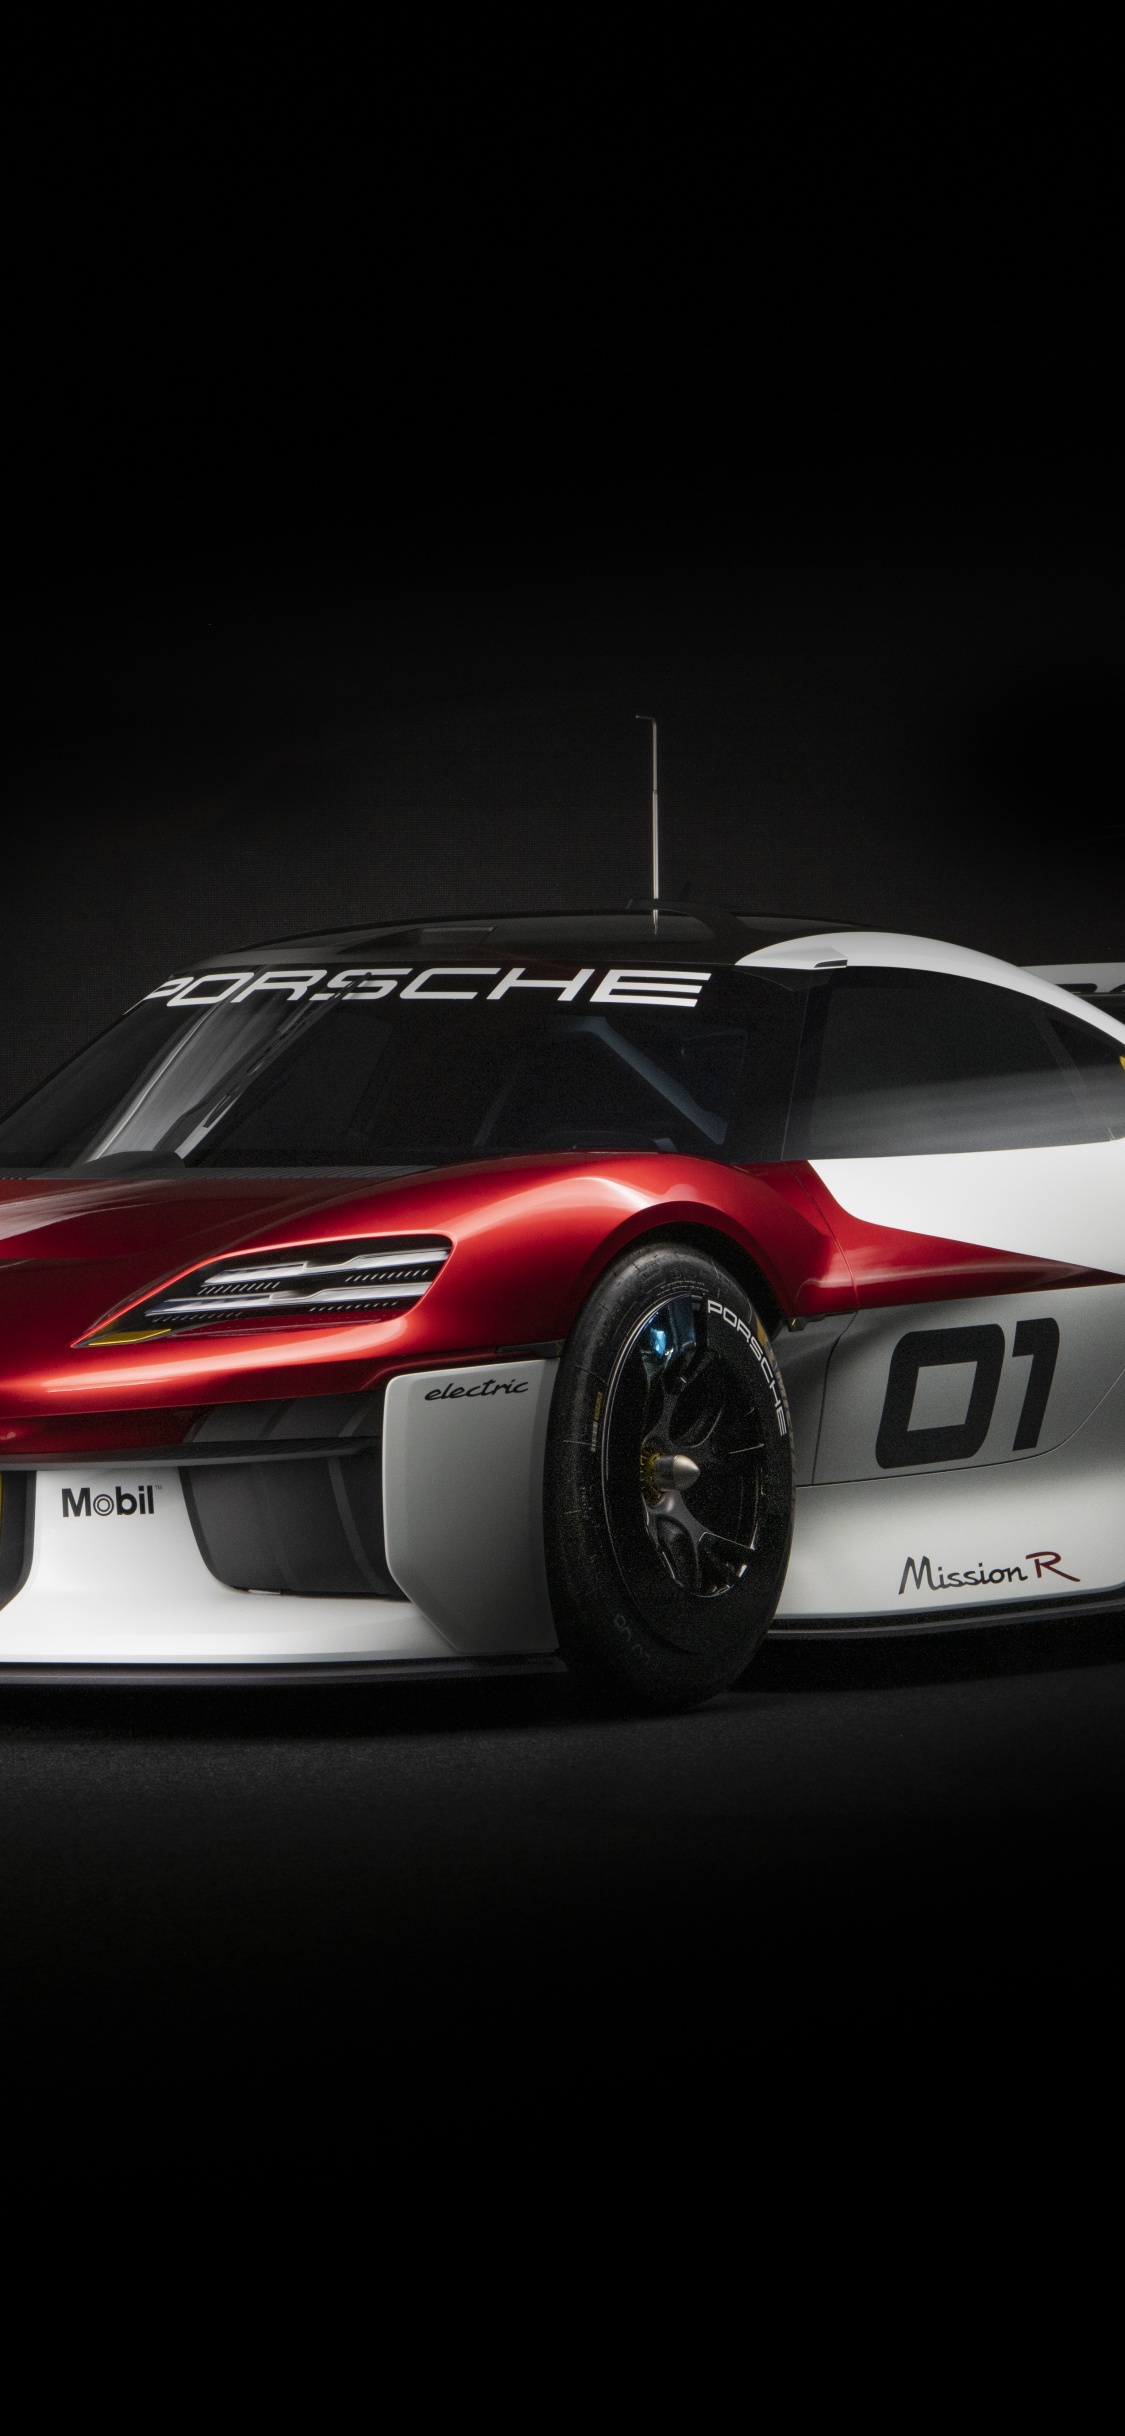 Porsche Mission R Wallpaper 4K, Electric Sports cars, Black/Dark, #6526